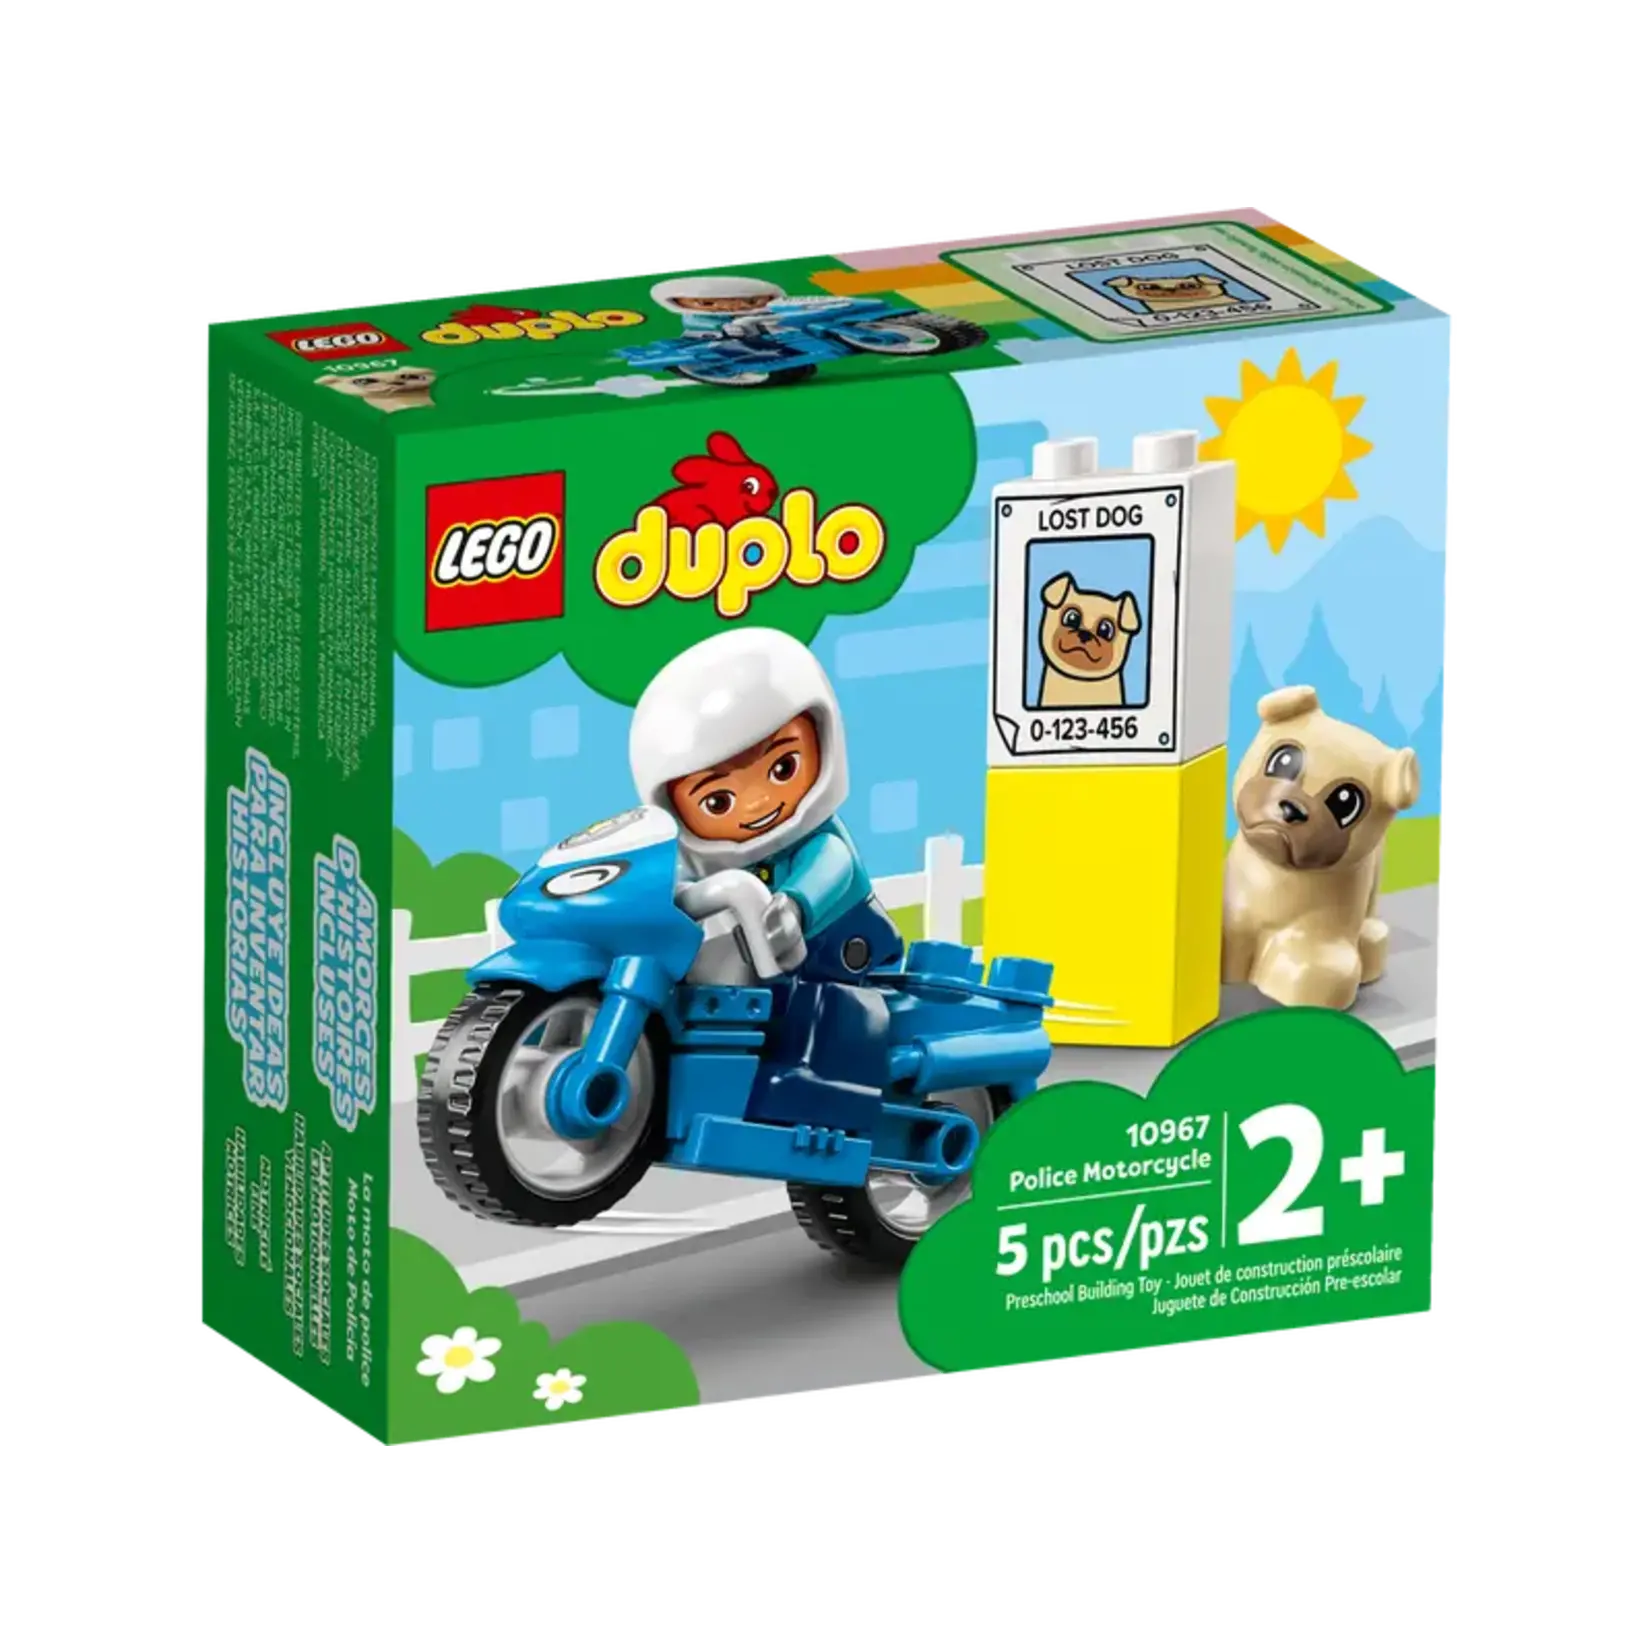 LEGO Duplo, police motorcycle